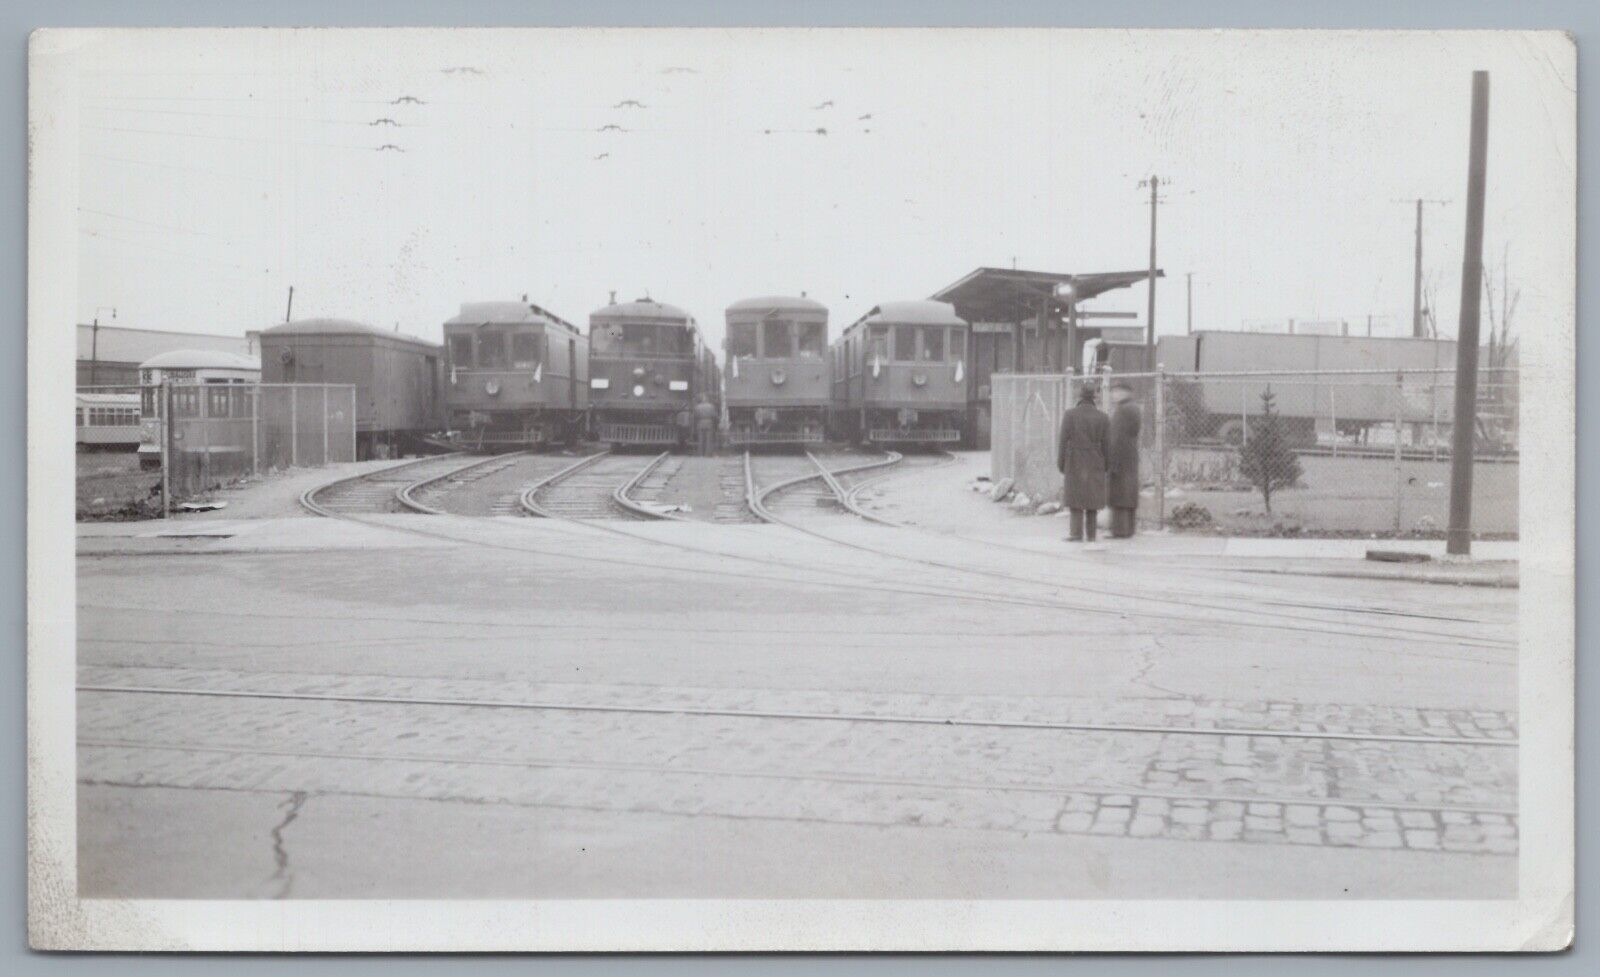 Trolley Photo - Lake Shore Electric Railway Interurban Passenger Car Yard 1937